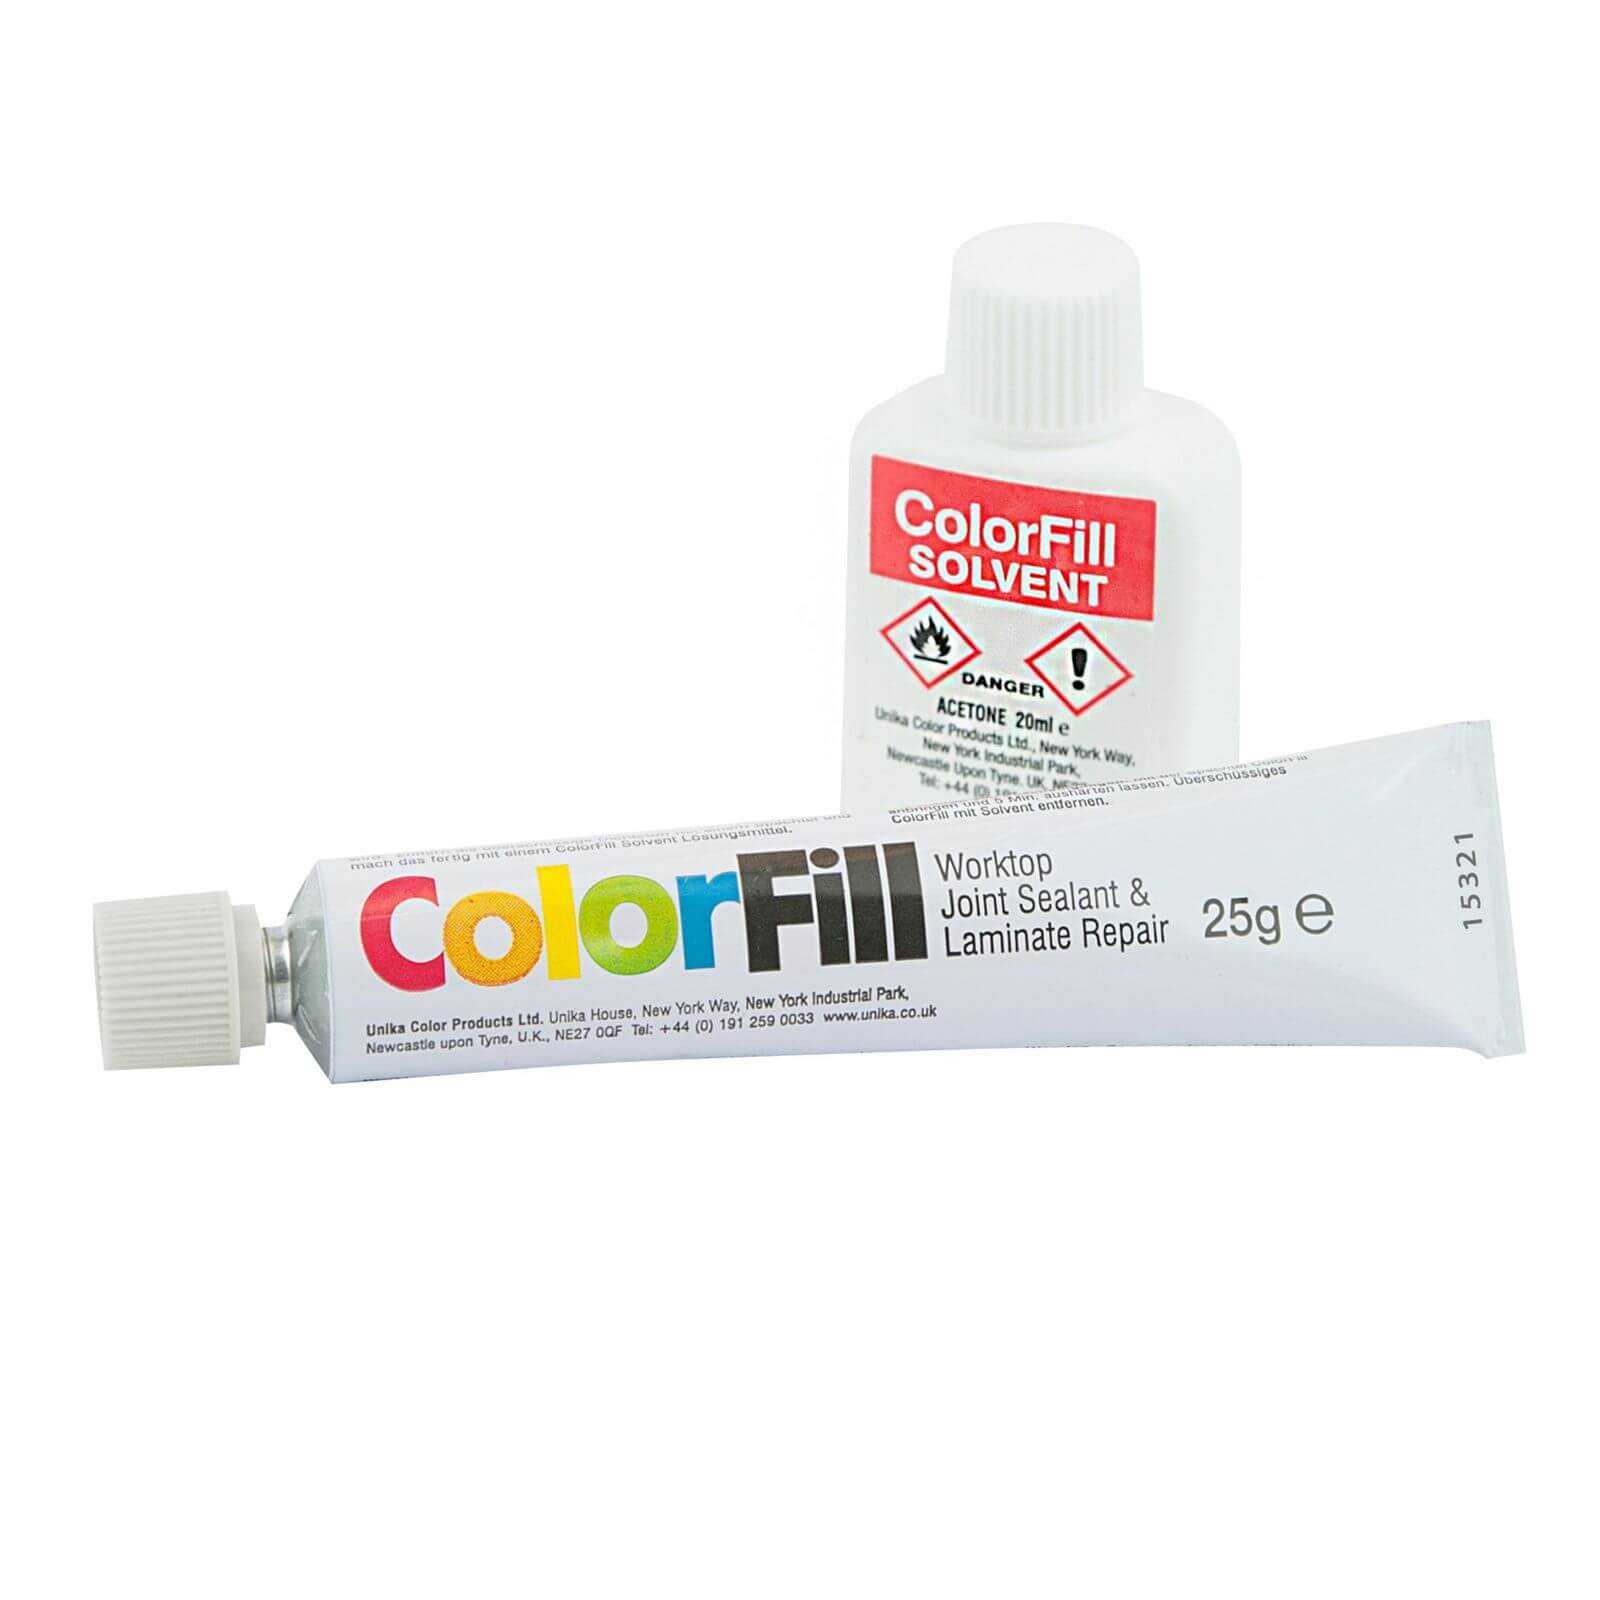 Unika Colorfill And Solvent Polar White - 25g